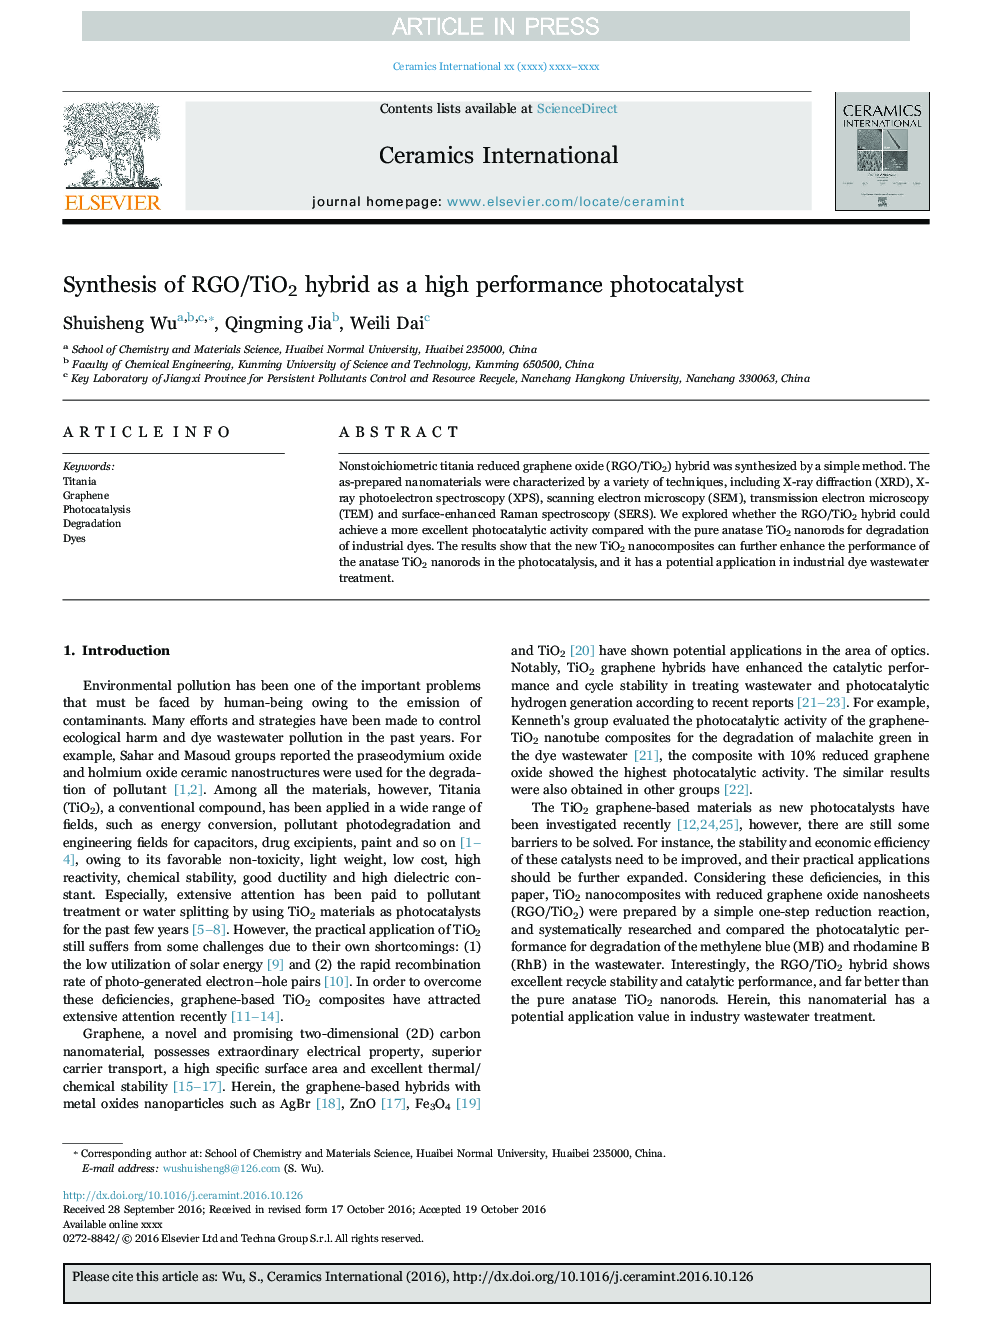 Synthesis of RGO/TiO2 hybrid as a high performance photocatalyst